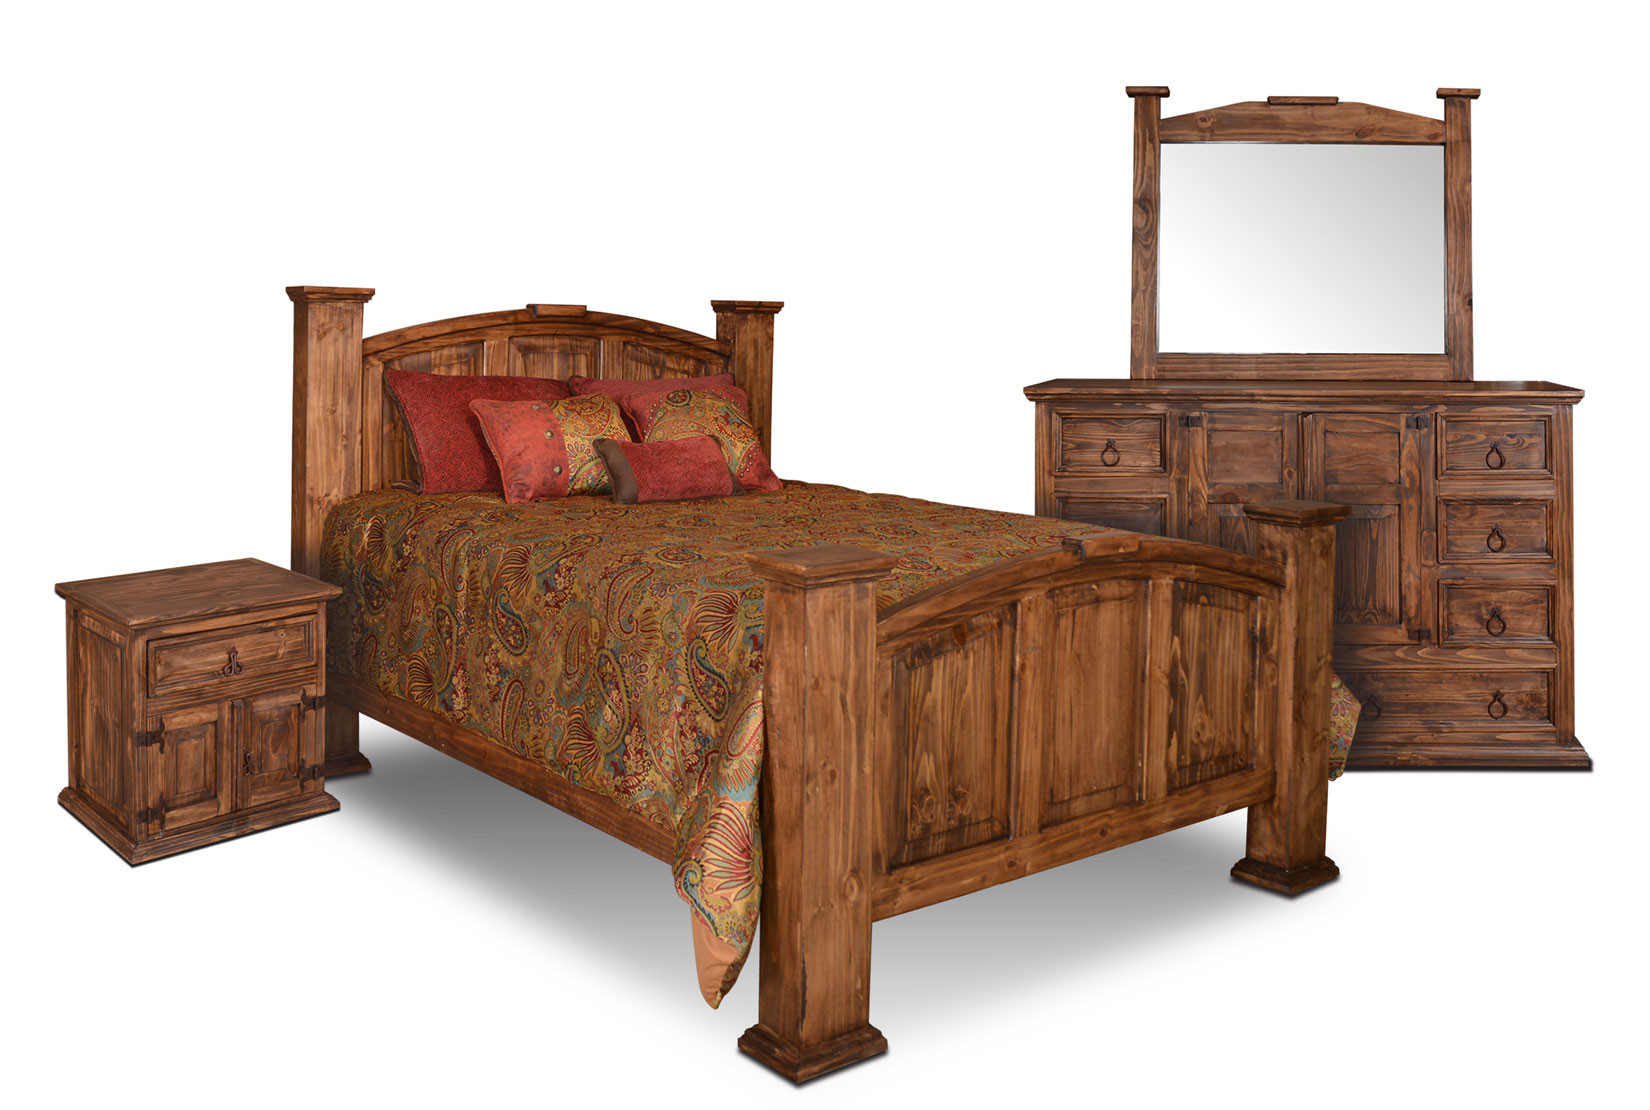 Rustic Pine Bedroom Furniture
 Rustic Bedroom Set Pine Wood Bedroom Set 4 Piece Bedroom Set